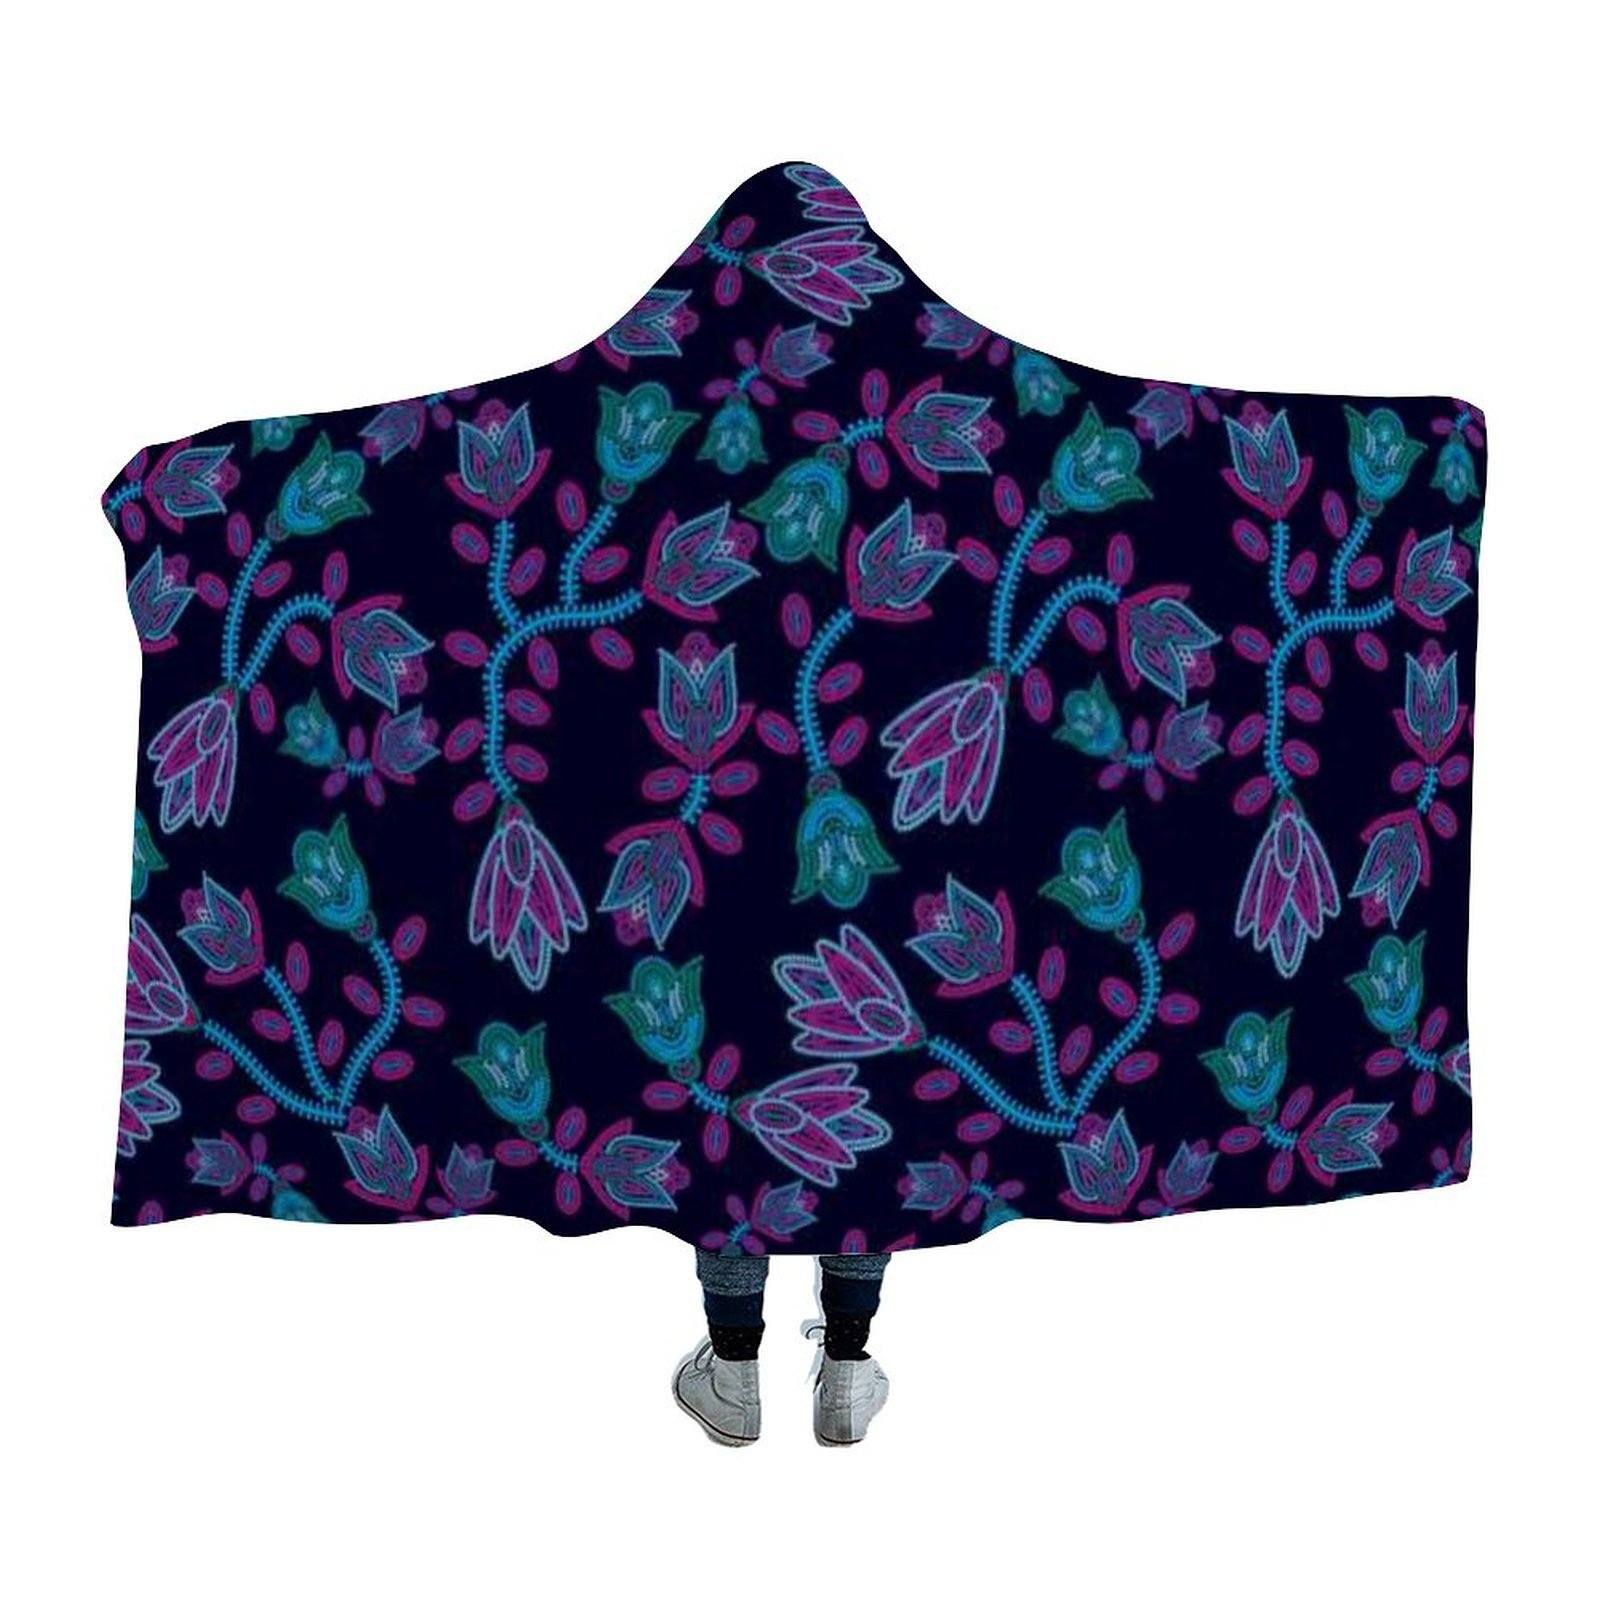 Beaded Blue Nouvea Hooded Blanket blanket 49 Dzine 